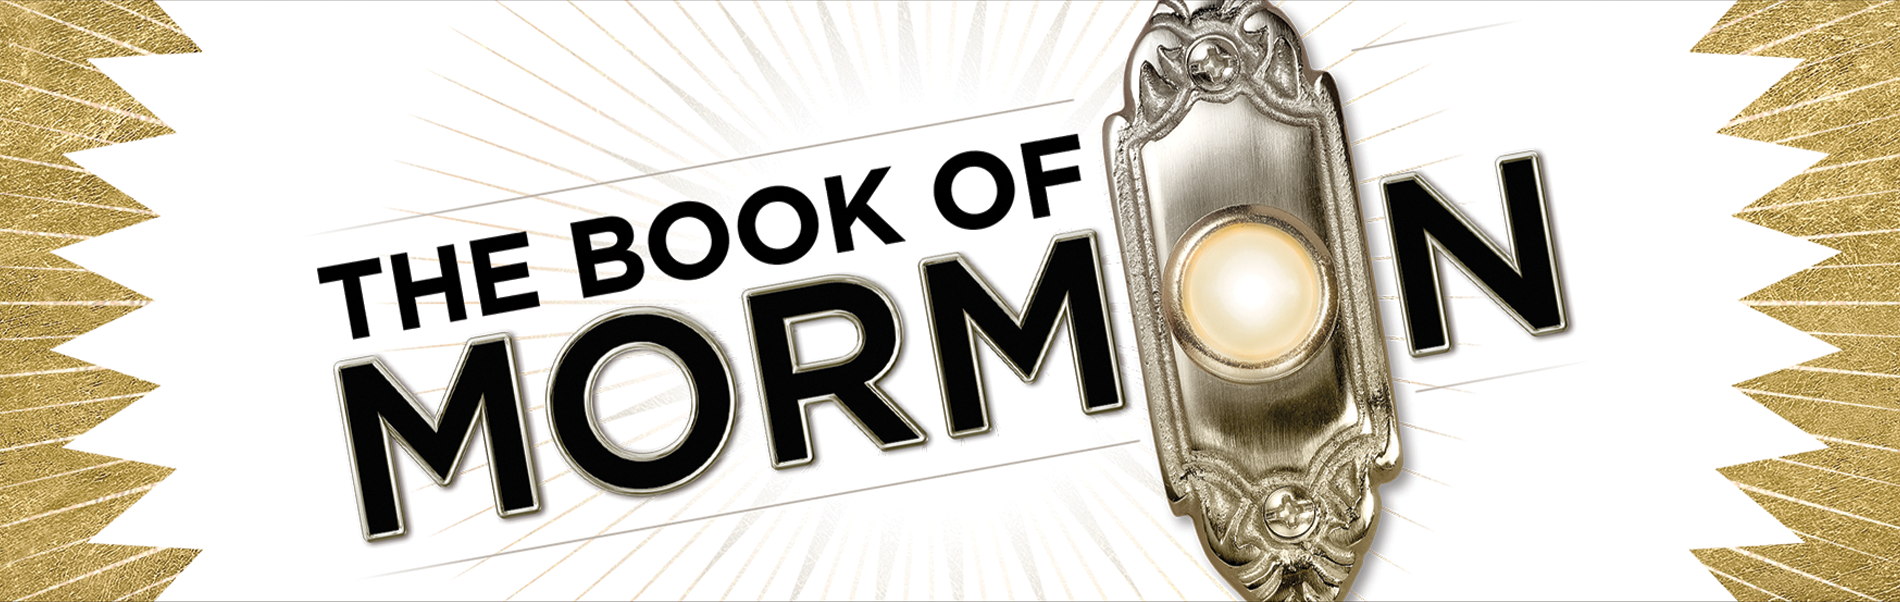 Slide 1: The Book of Mormon